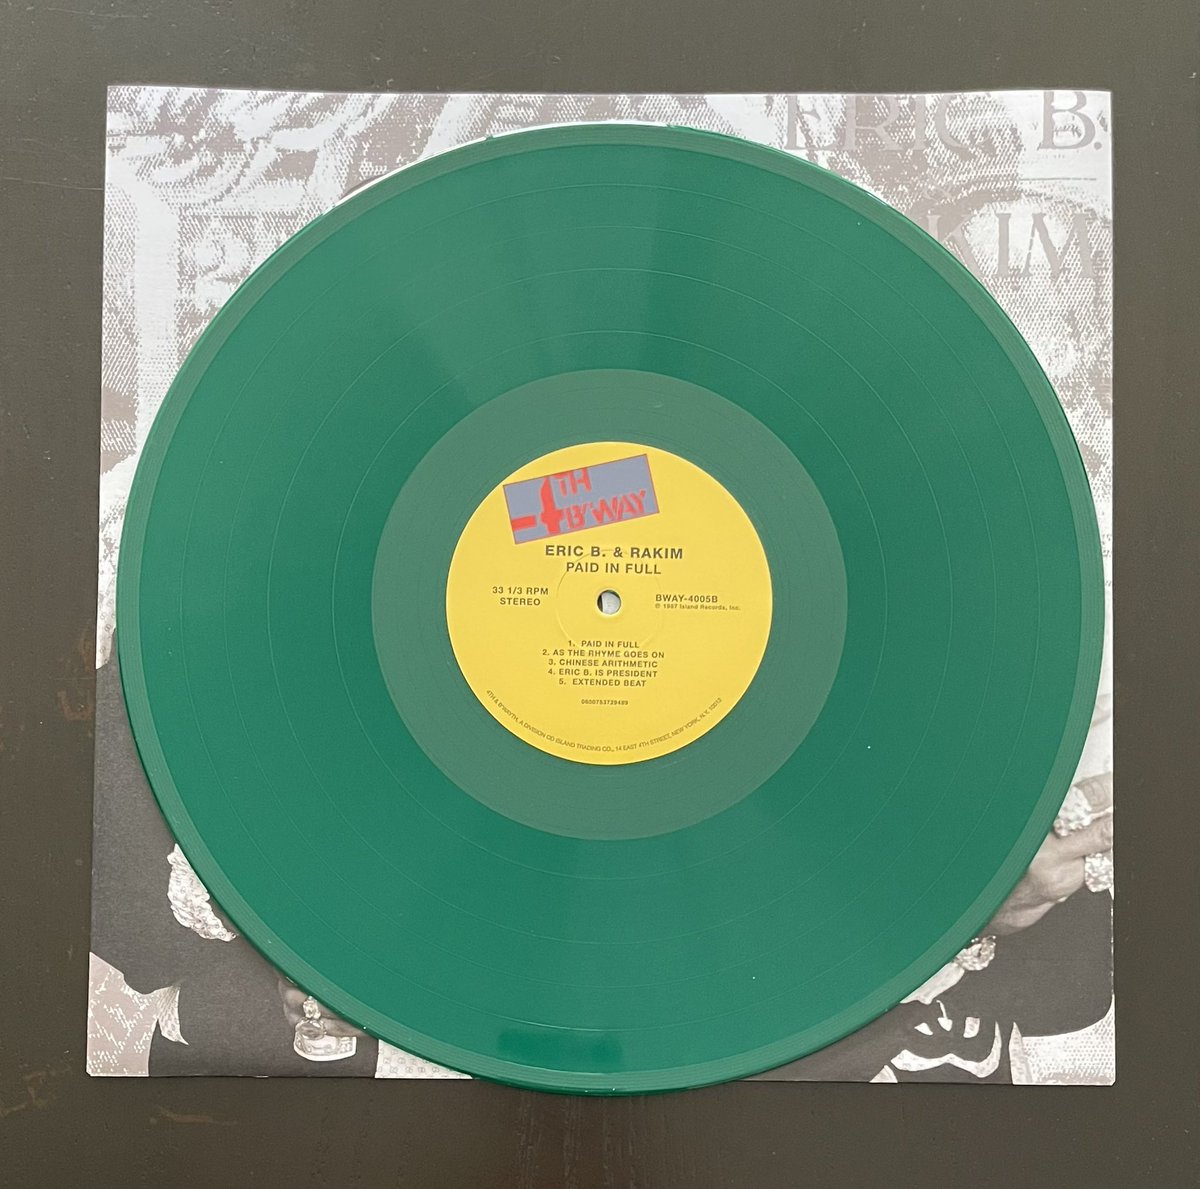 Eric B. & Rakim “Paid In Full” 2017 Ltd Edition Reissue Green money Vinyl